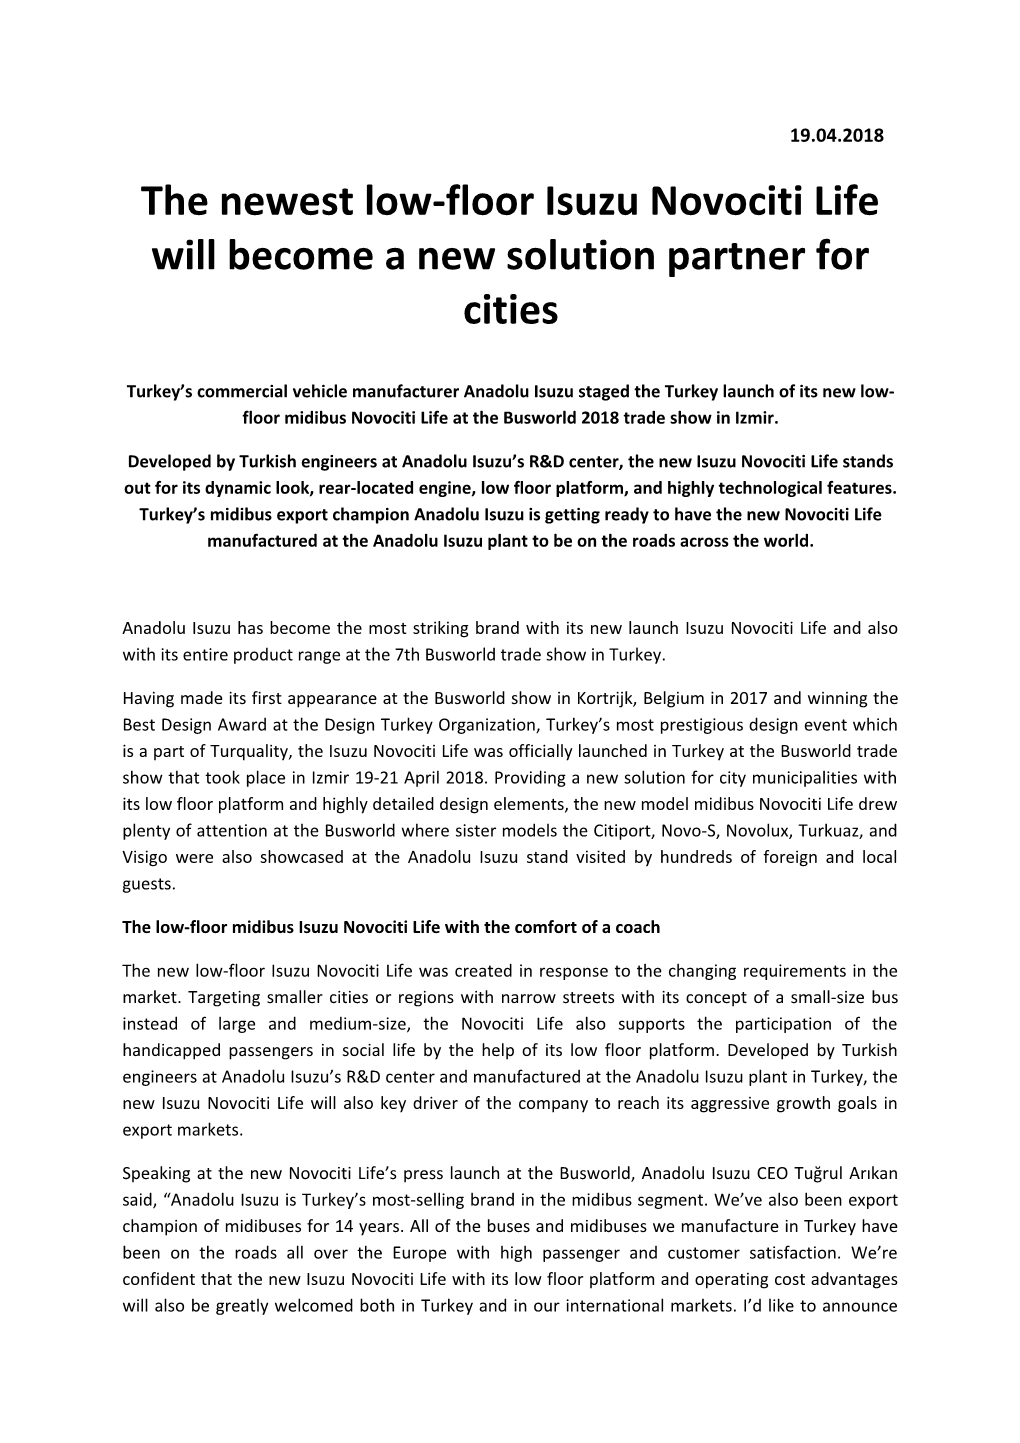 The Newestlow-Floor Isuzu Novociti Life Will Becomea New Solution Partner for Cities